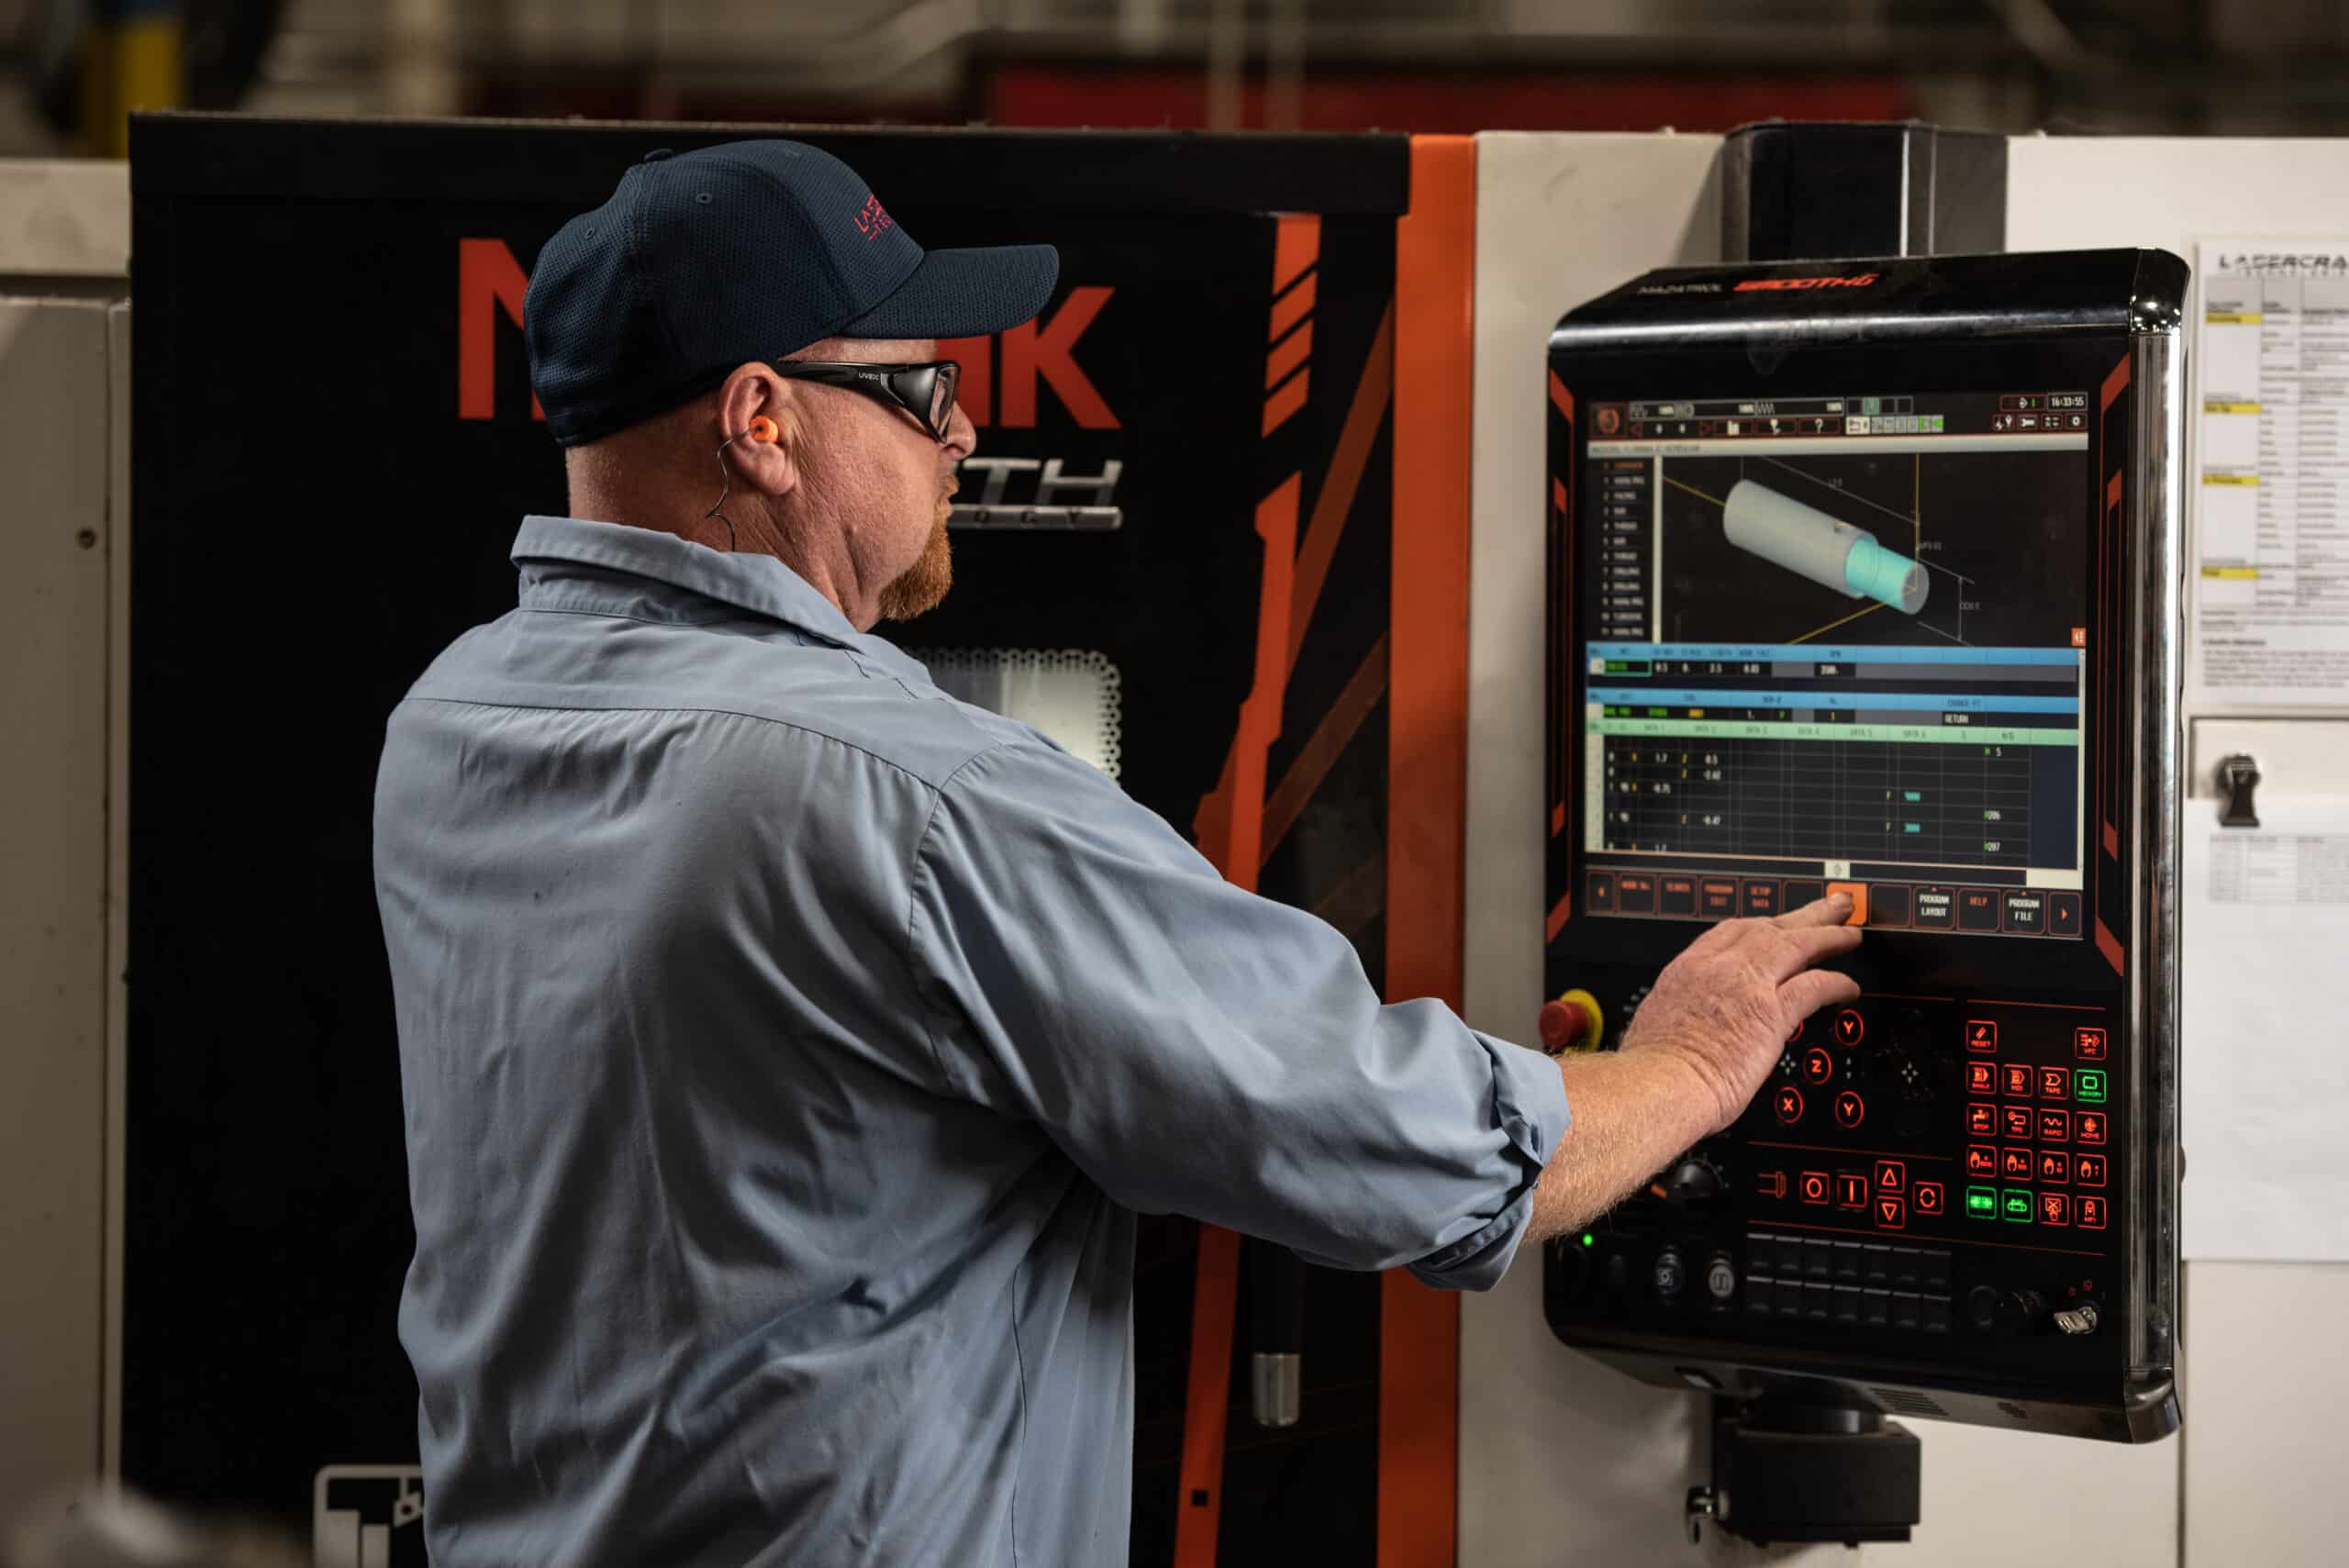 Laser Craft Tech employee operates a digital control panel on a fabrication machine